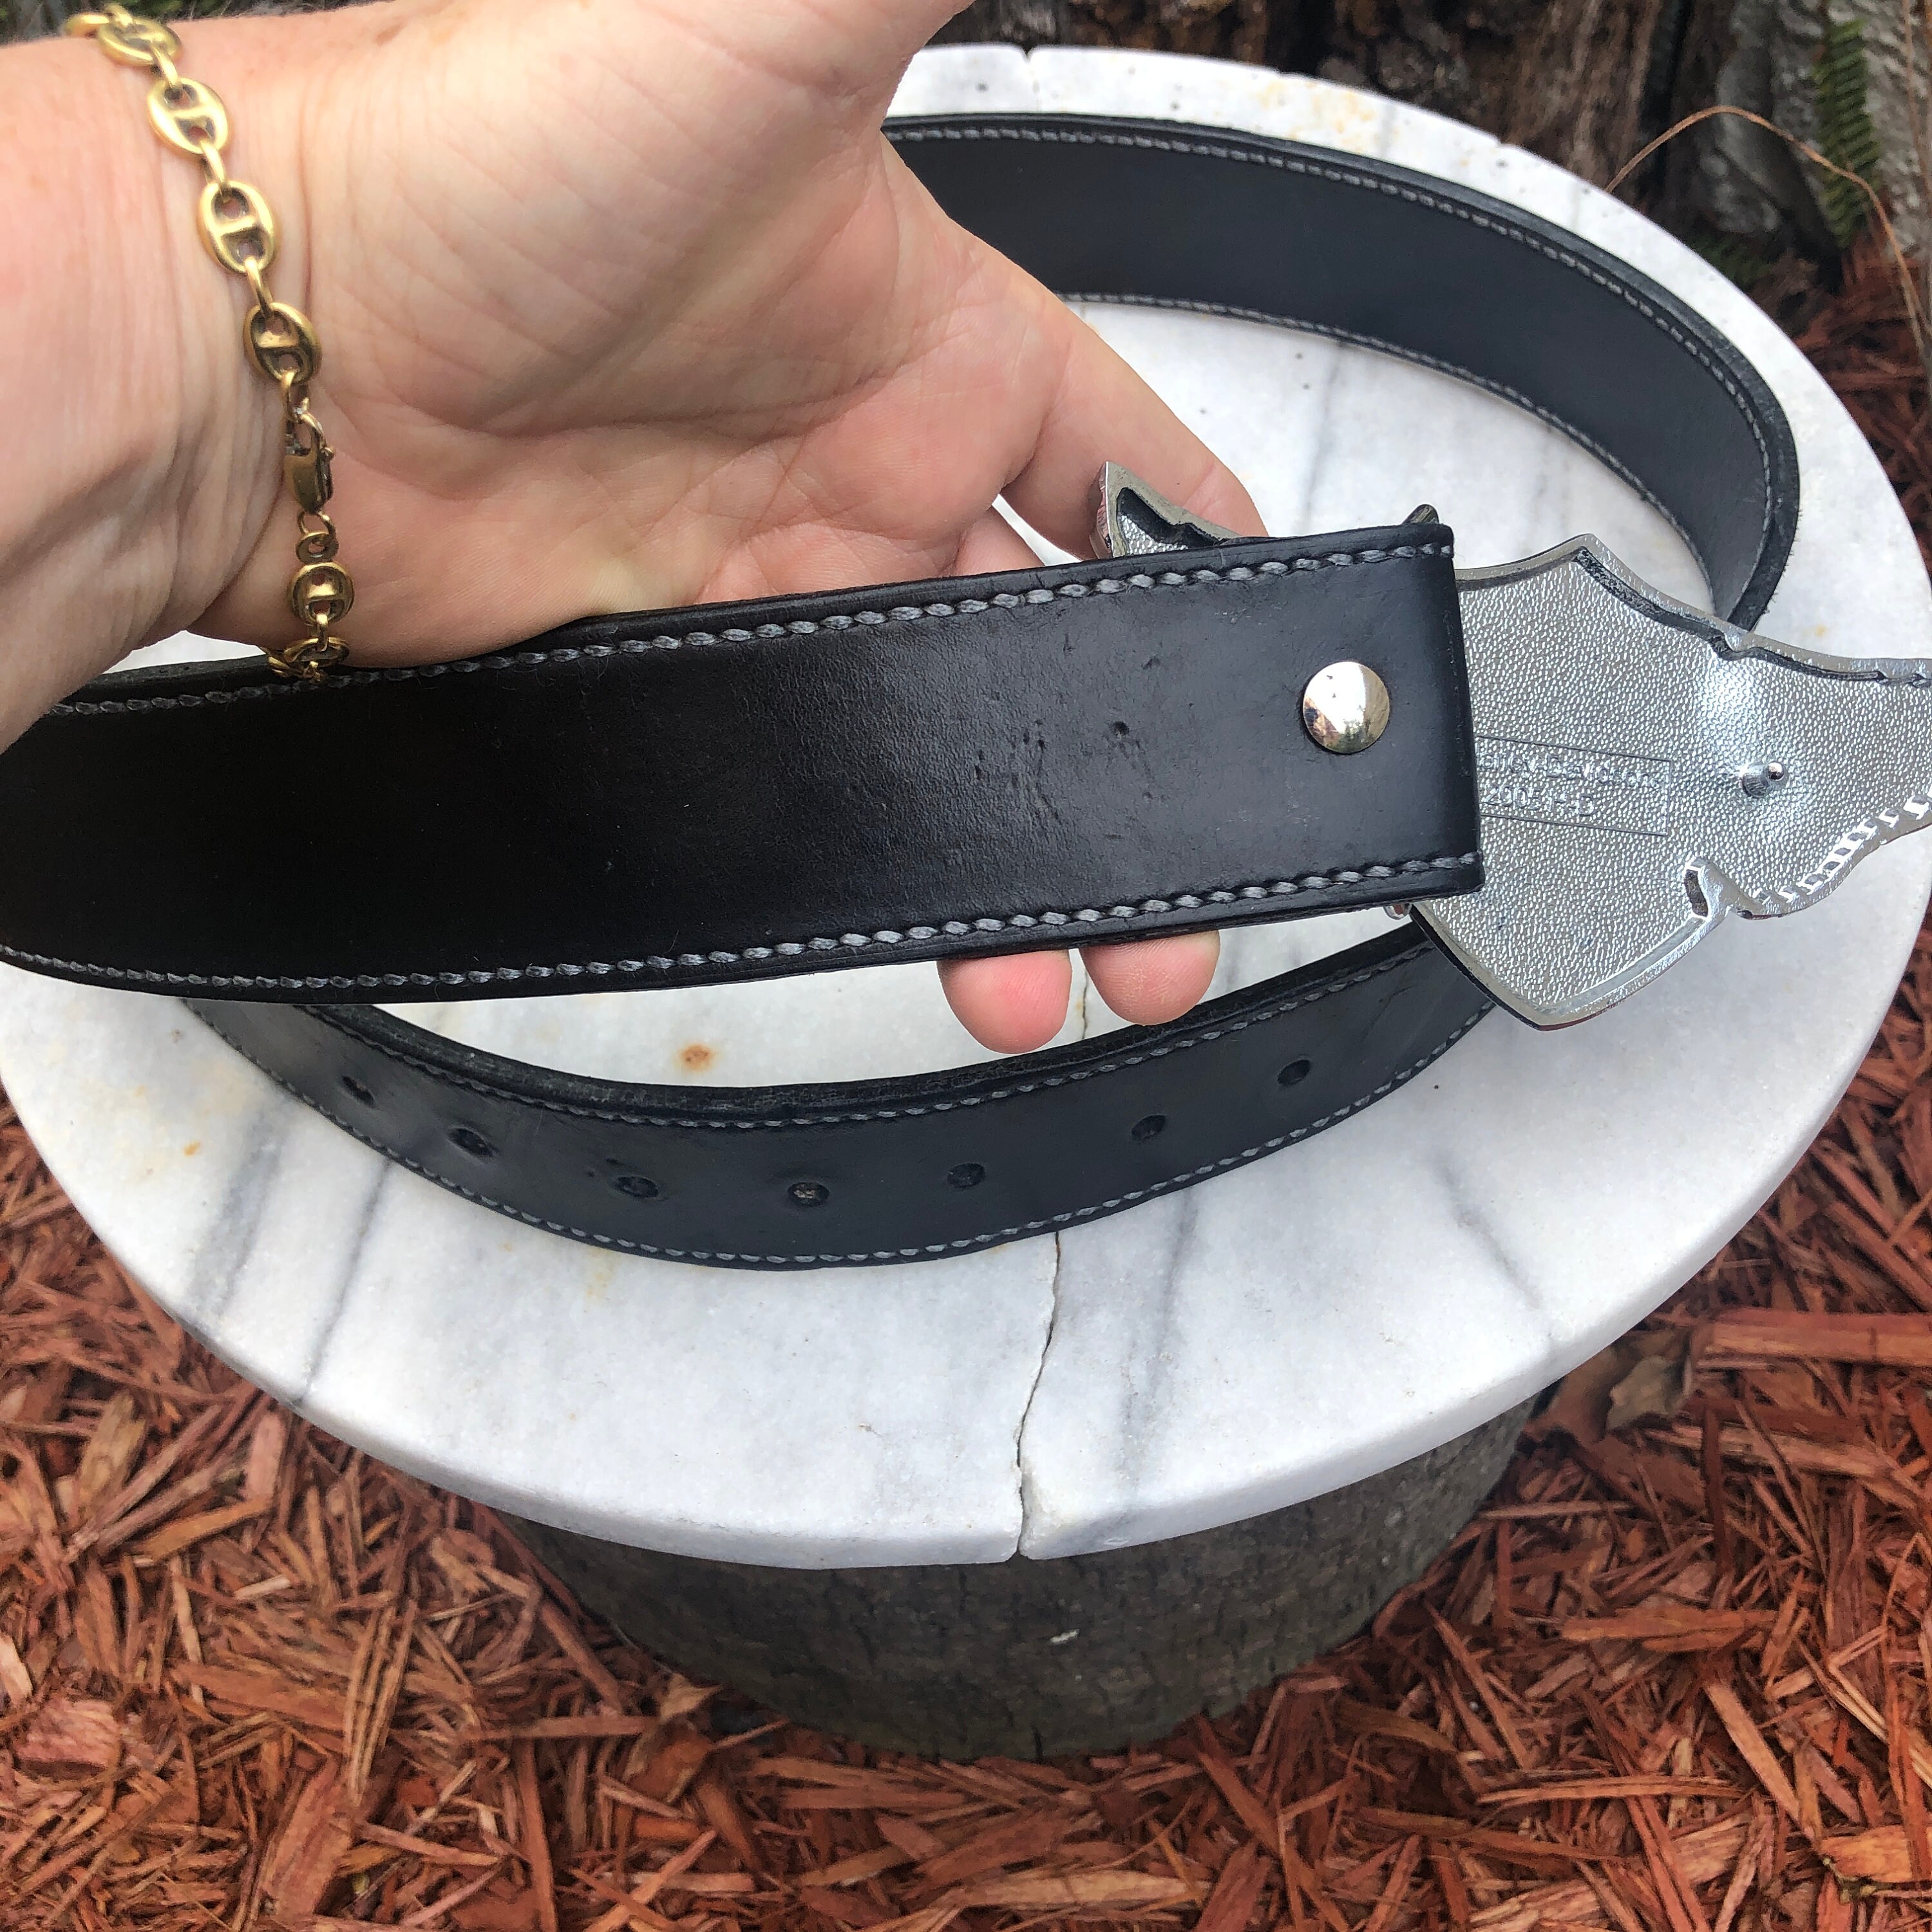 Handmade/hand-stitched Black Leather Belt With Harley Davidson